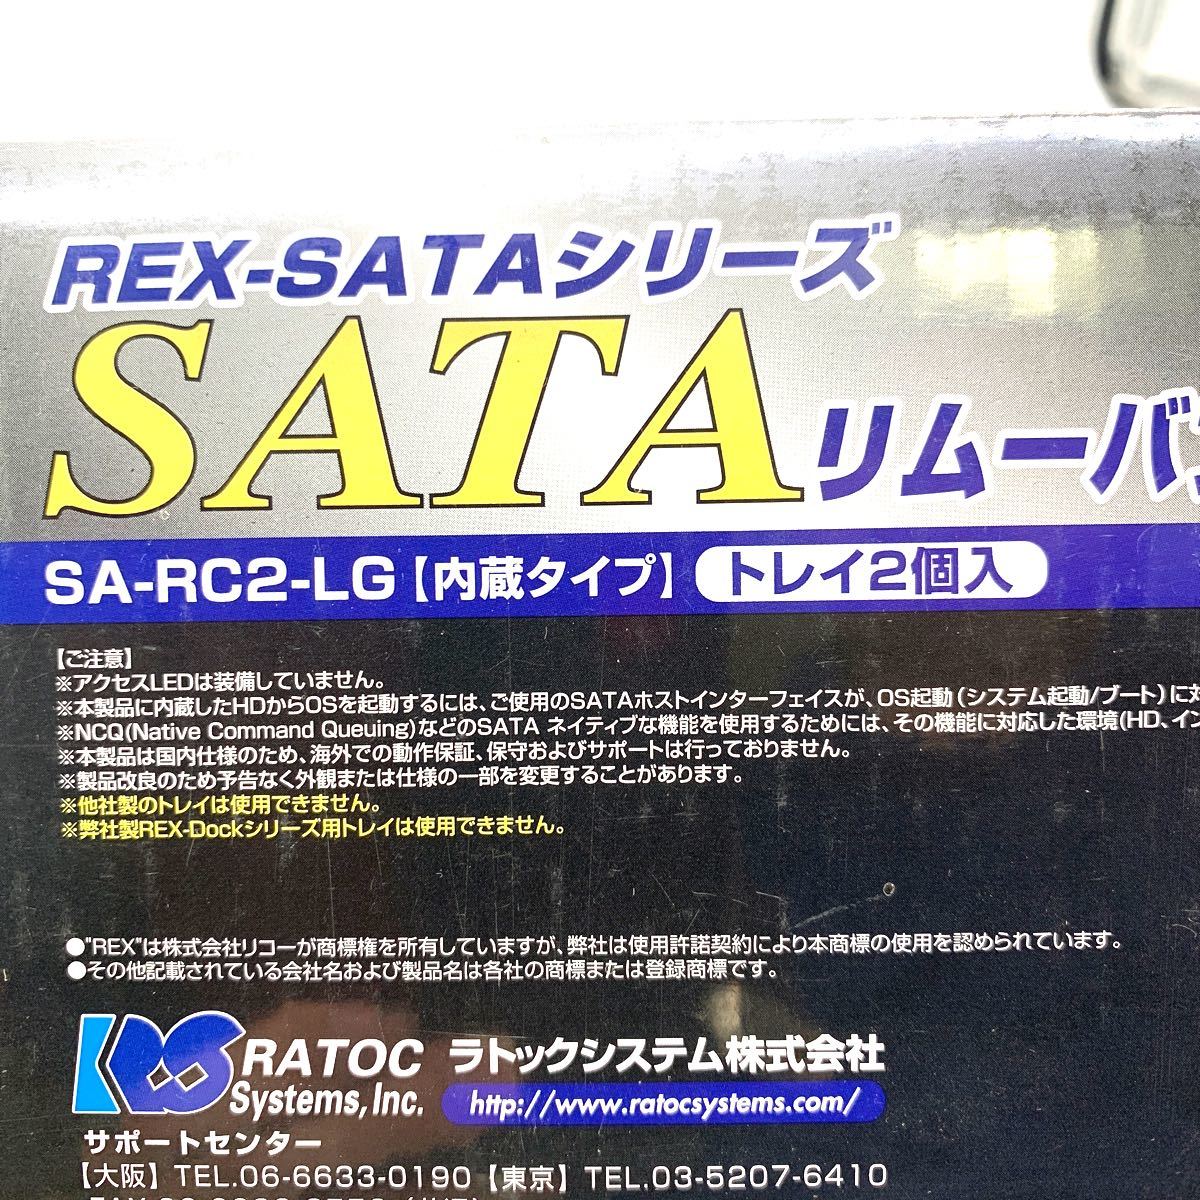 ★TS230★ ラトックシステム REX-SATA シリアルATAリムーバブルケーストレイ2個入り ライトグレー